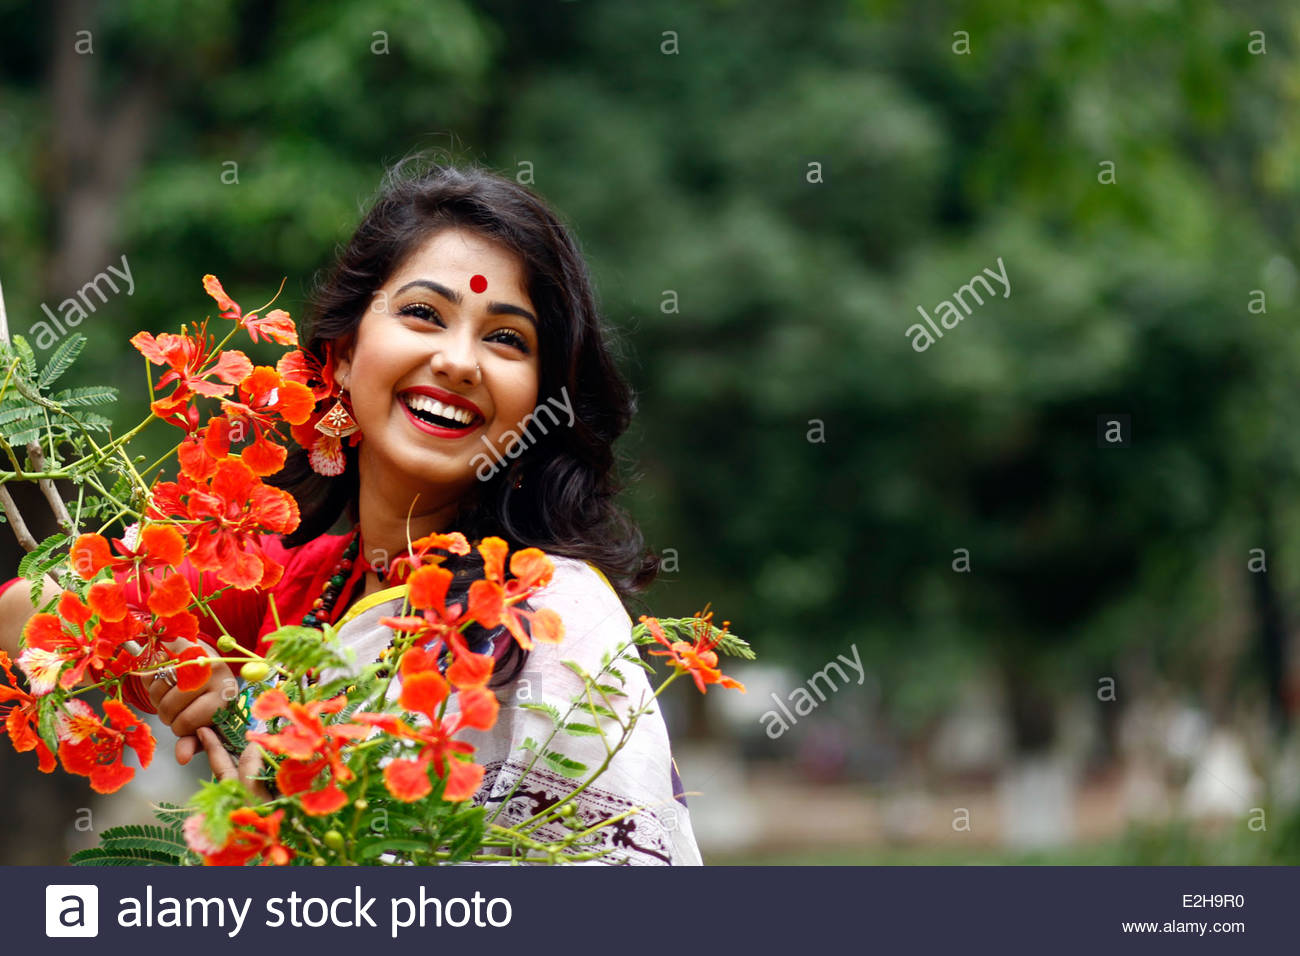 bangladeshi-girls-enjoying-with-summer-flowers-E2H9R0.jpg